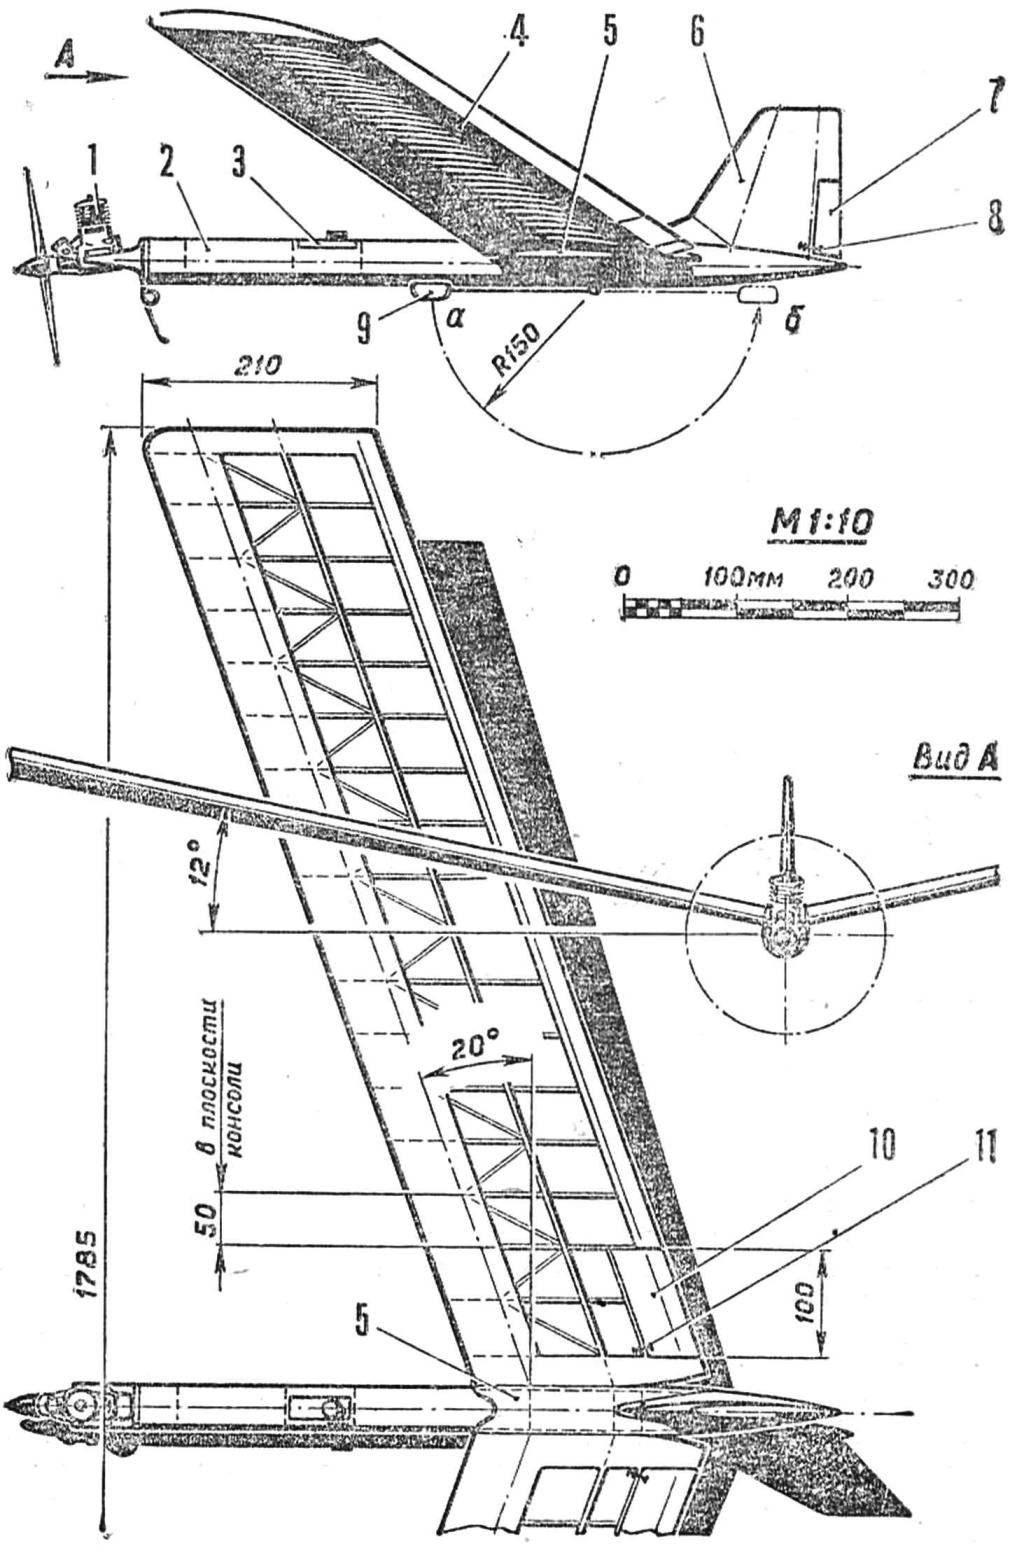 Fig. 1. Timer model airplane pilot class